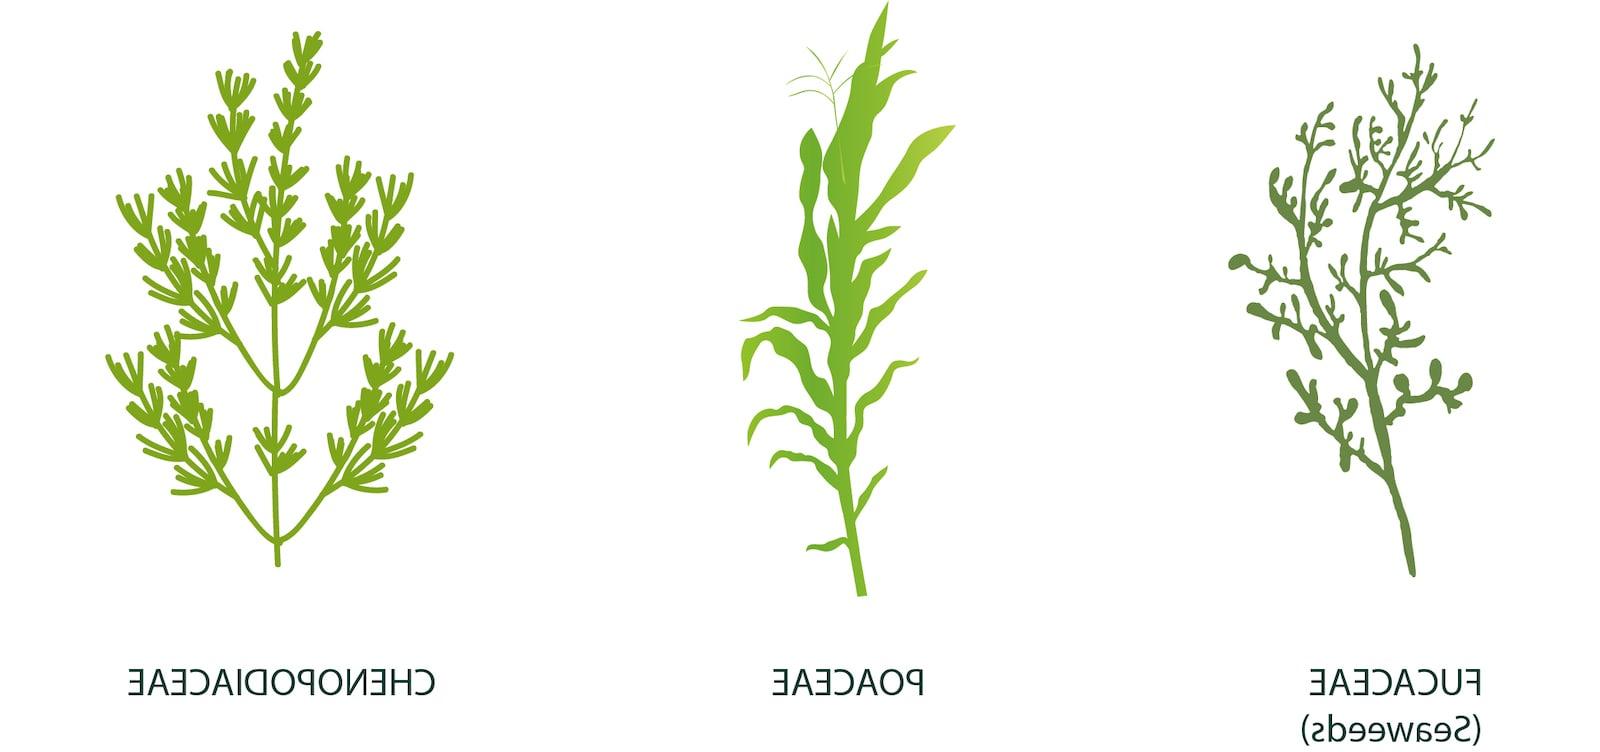 YieldON extracts - Fucaceae (Seaweeds), Poaceae, Chenopodiaceae